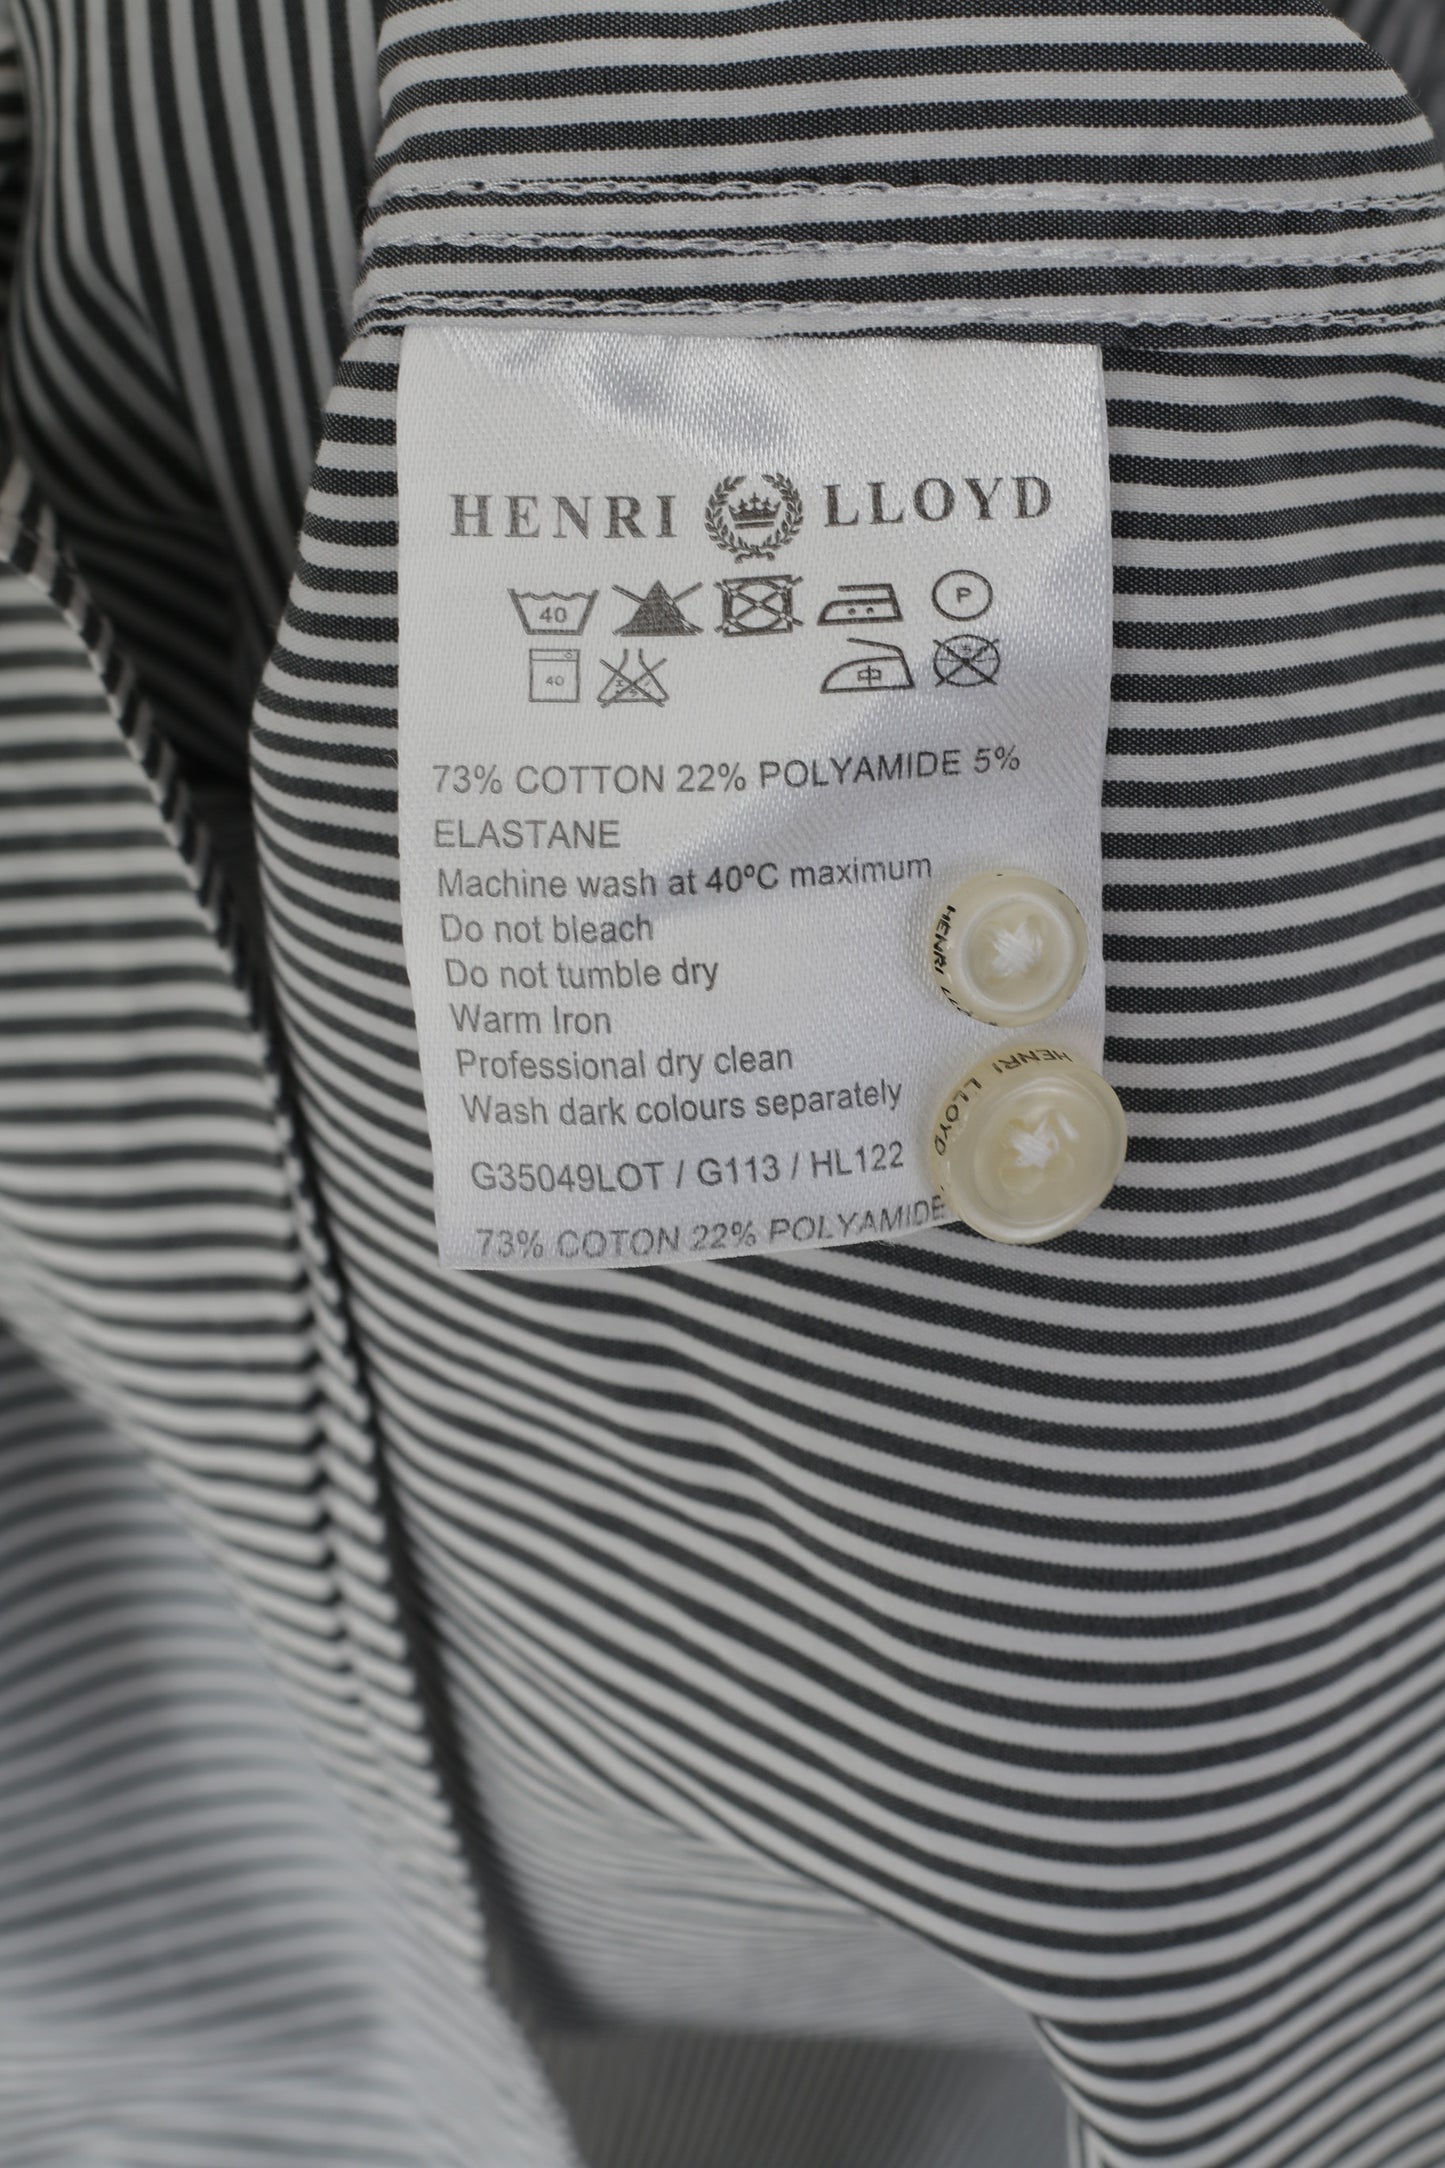 Henri Lloyd Men L Casual Shirt Gray Striped Cotton Regular Fit Long Sleeve Lotus Team Top